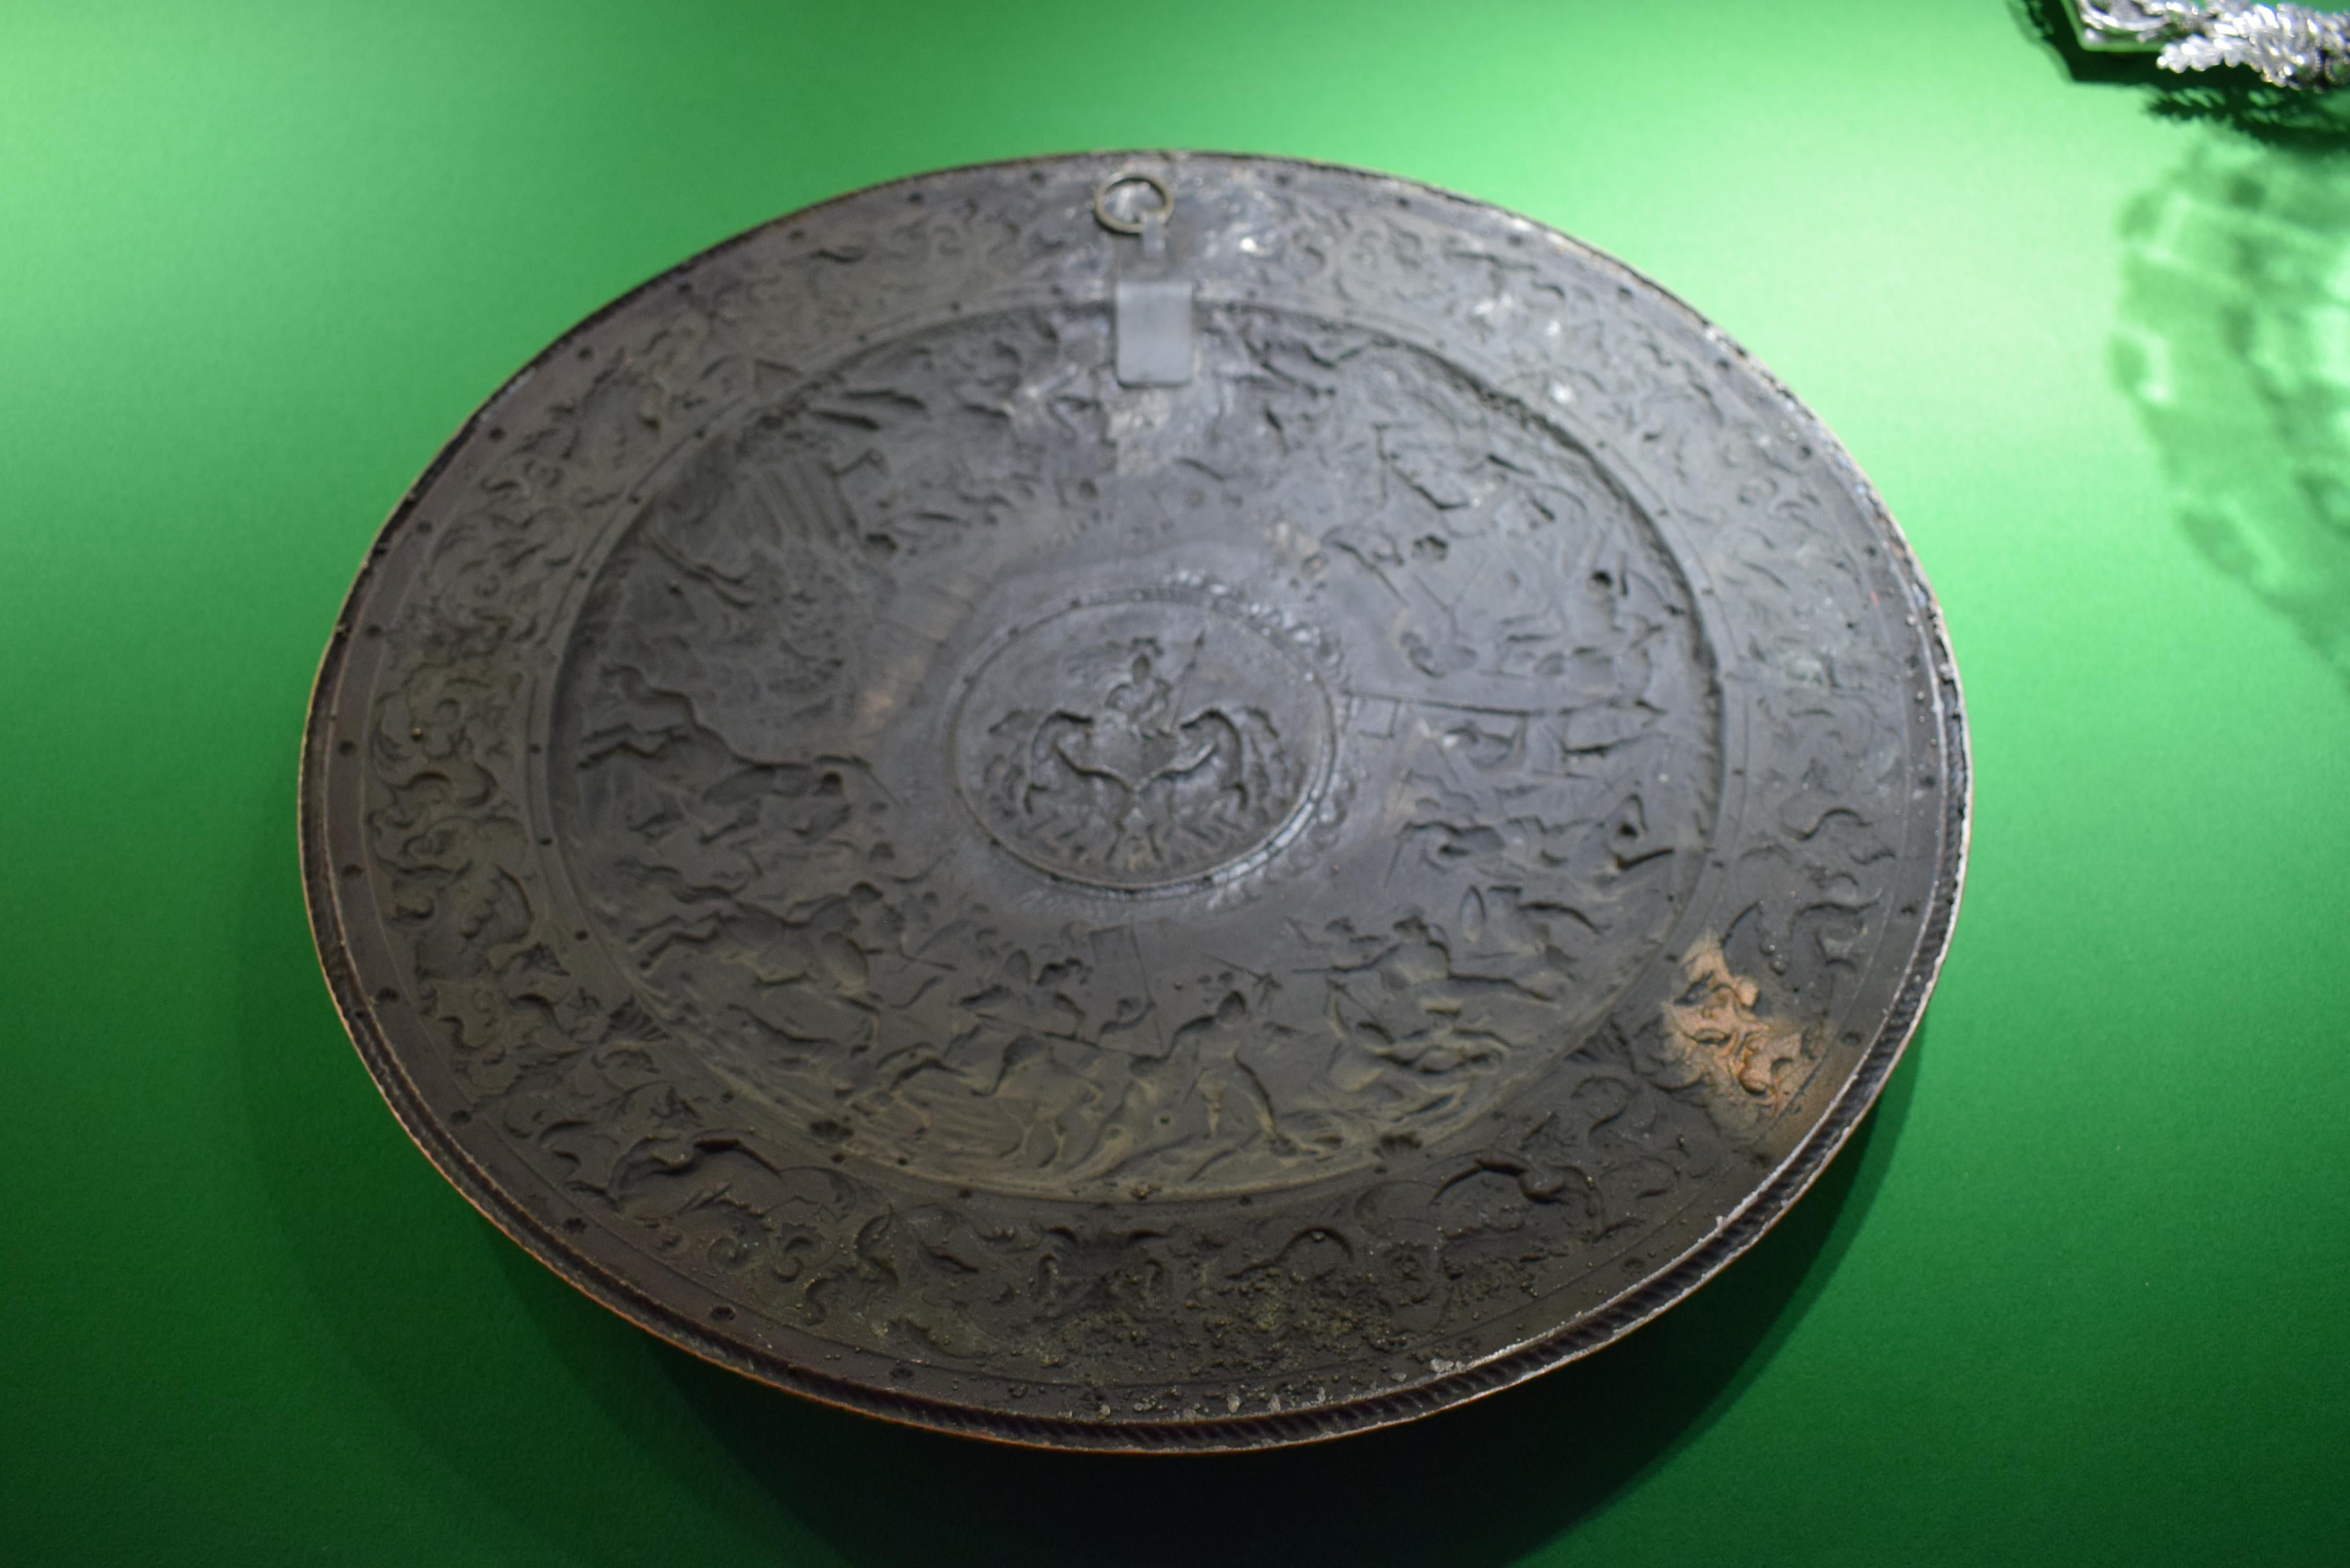 Superb Silverplated Circular Shield Depicting Battle Scene 12